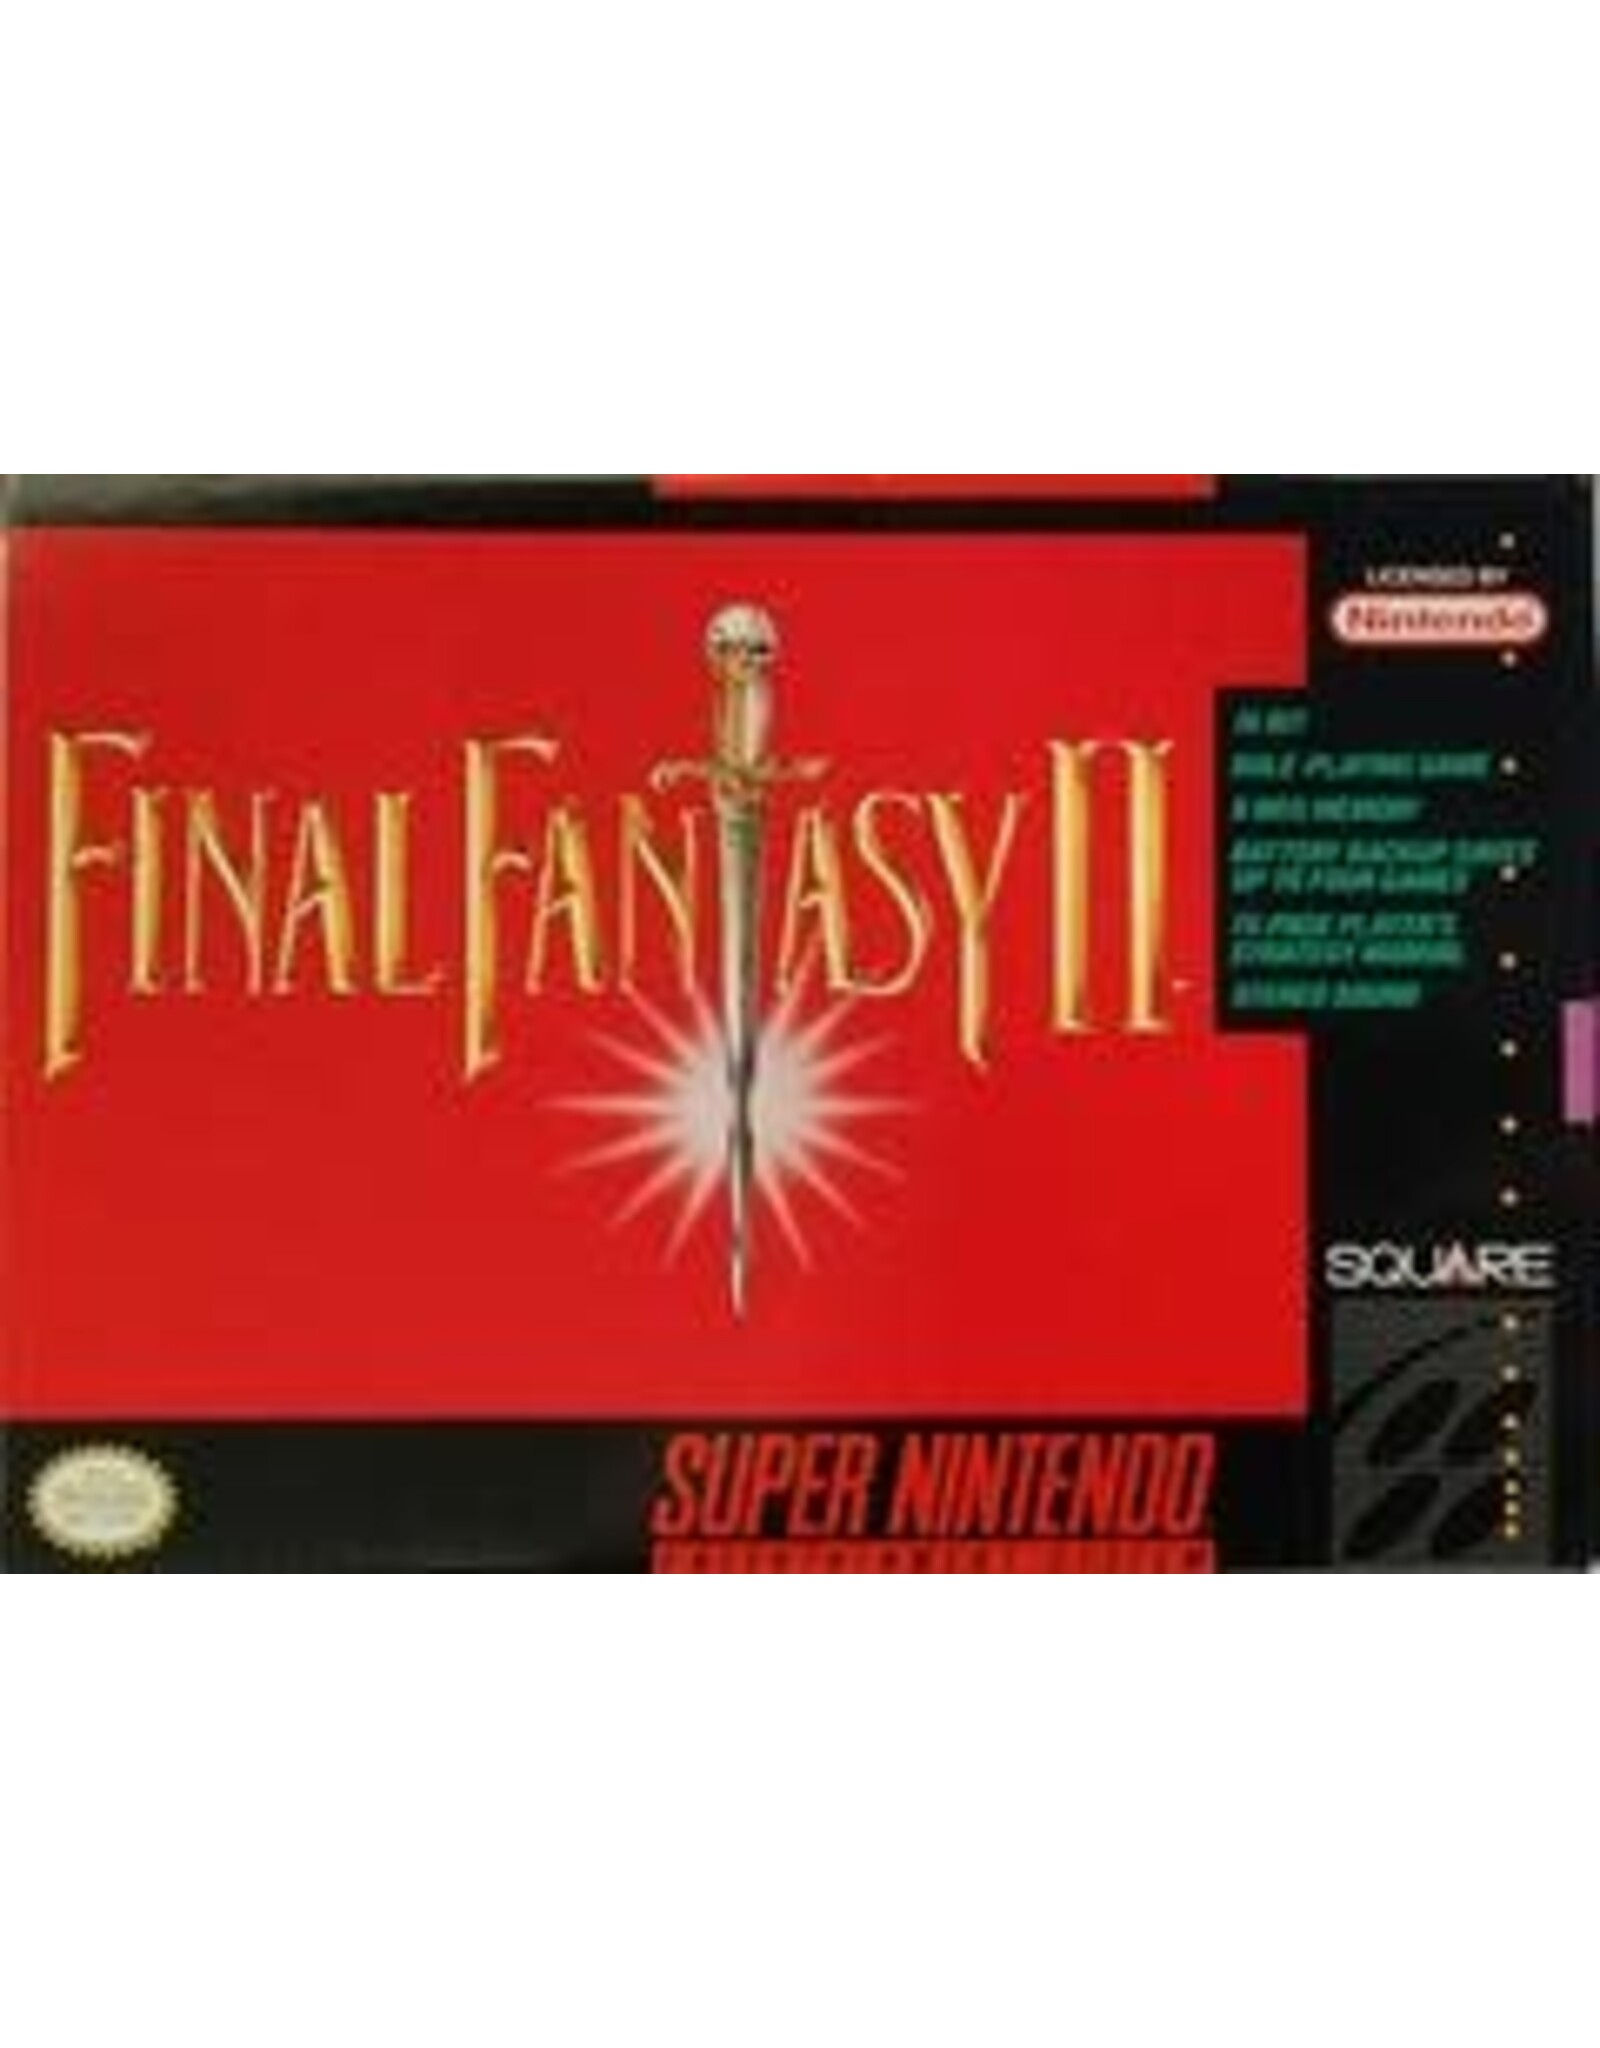 Super Nintendo Final Fantasy II (Used, No Manual, Cosmetic Damage)